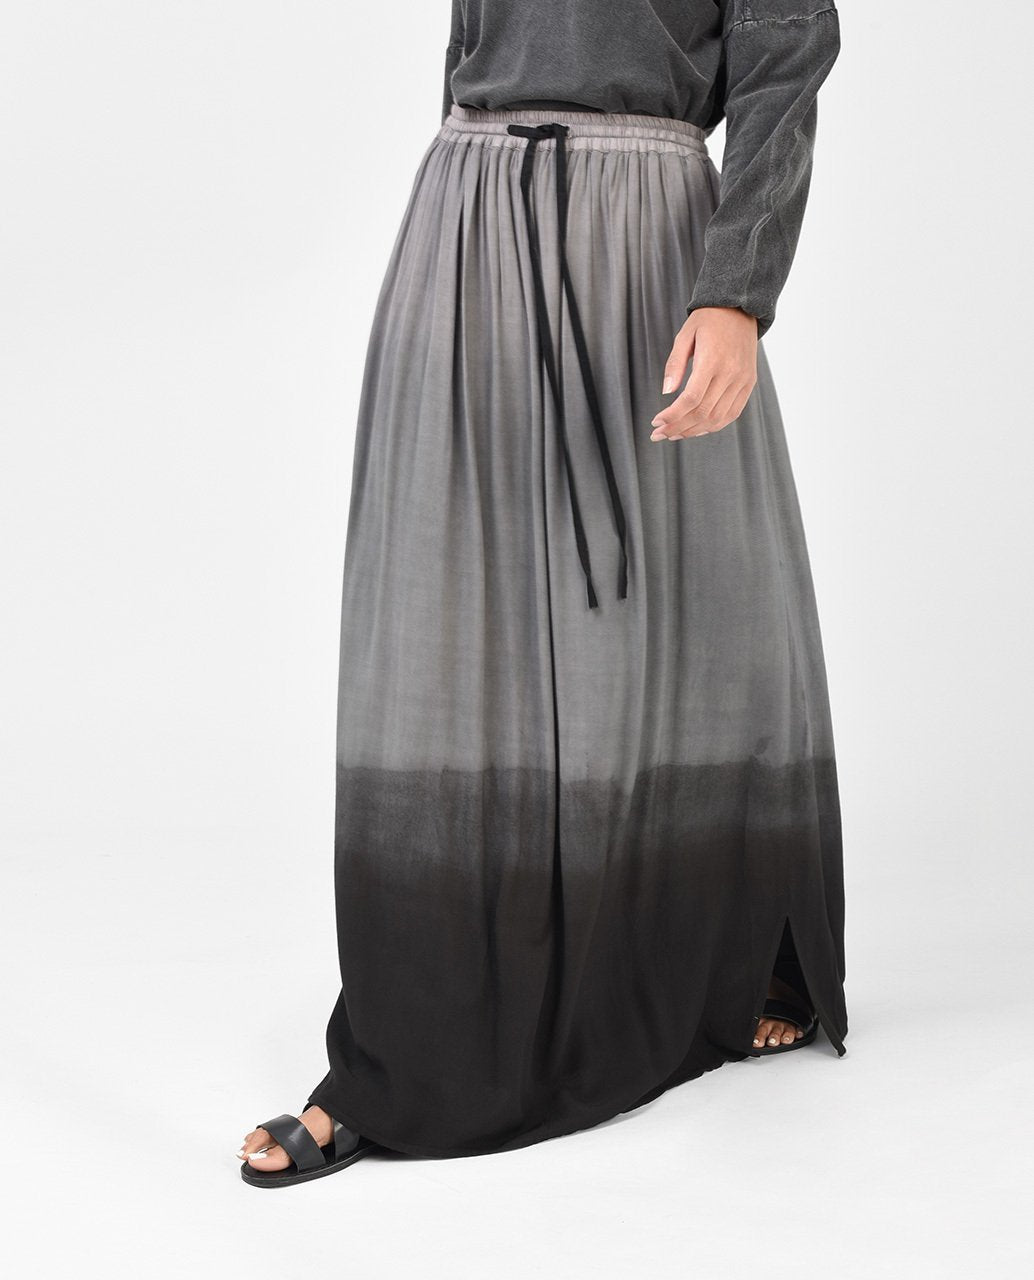 Grey Ombre Skirt Slim Petite (W28 L28) 